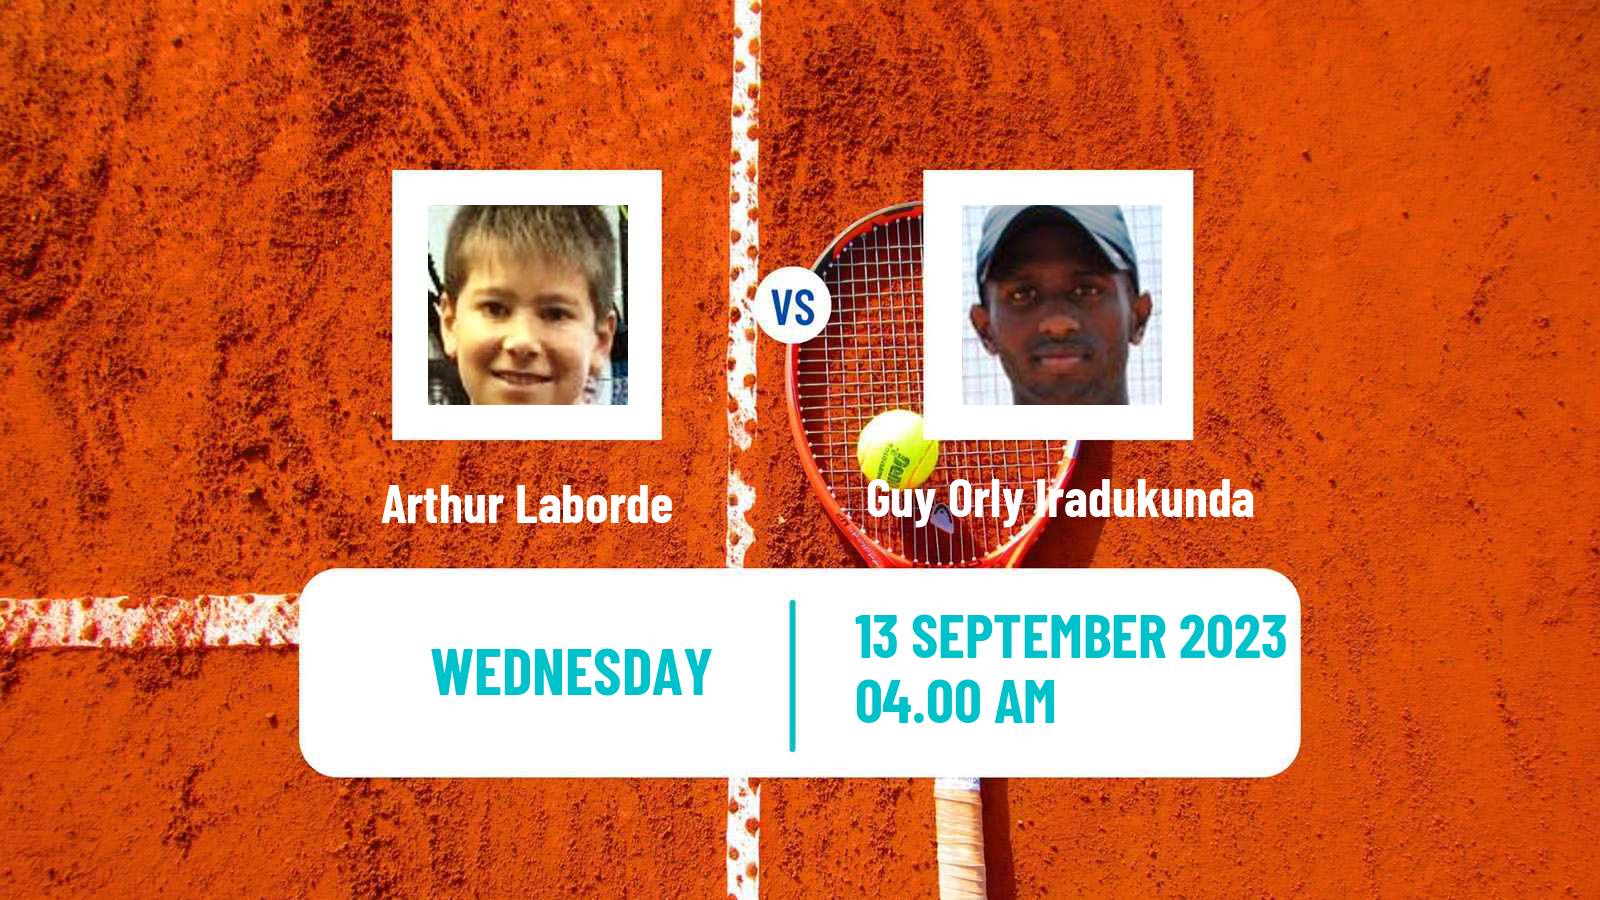 Tennis ITF M25 Kigali 2 Men Arthur Laborde - Guy Orly Iradukunda